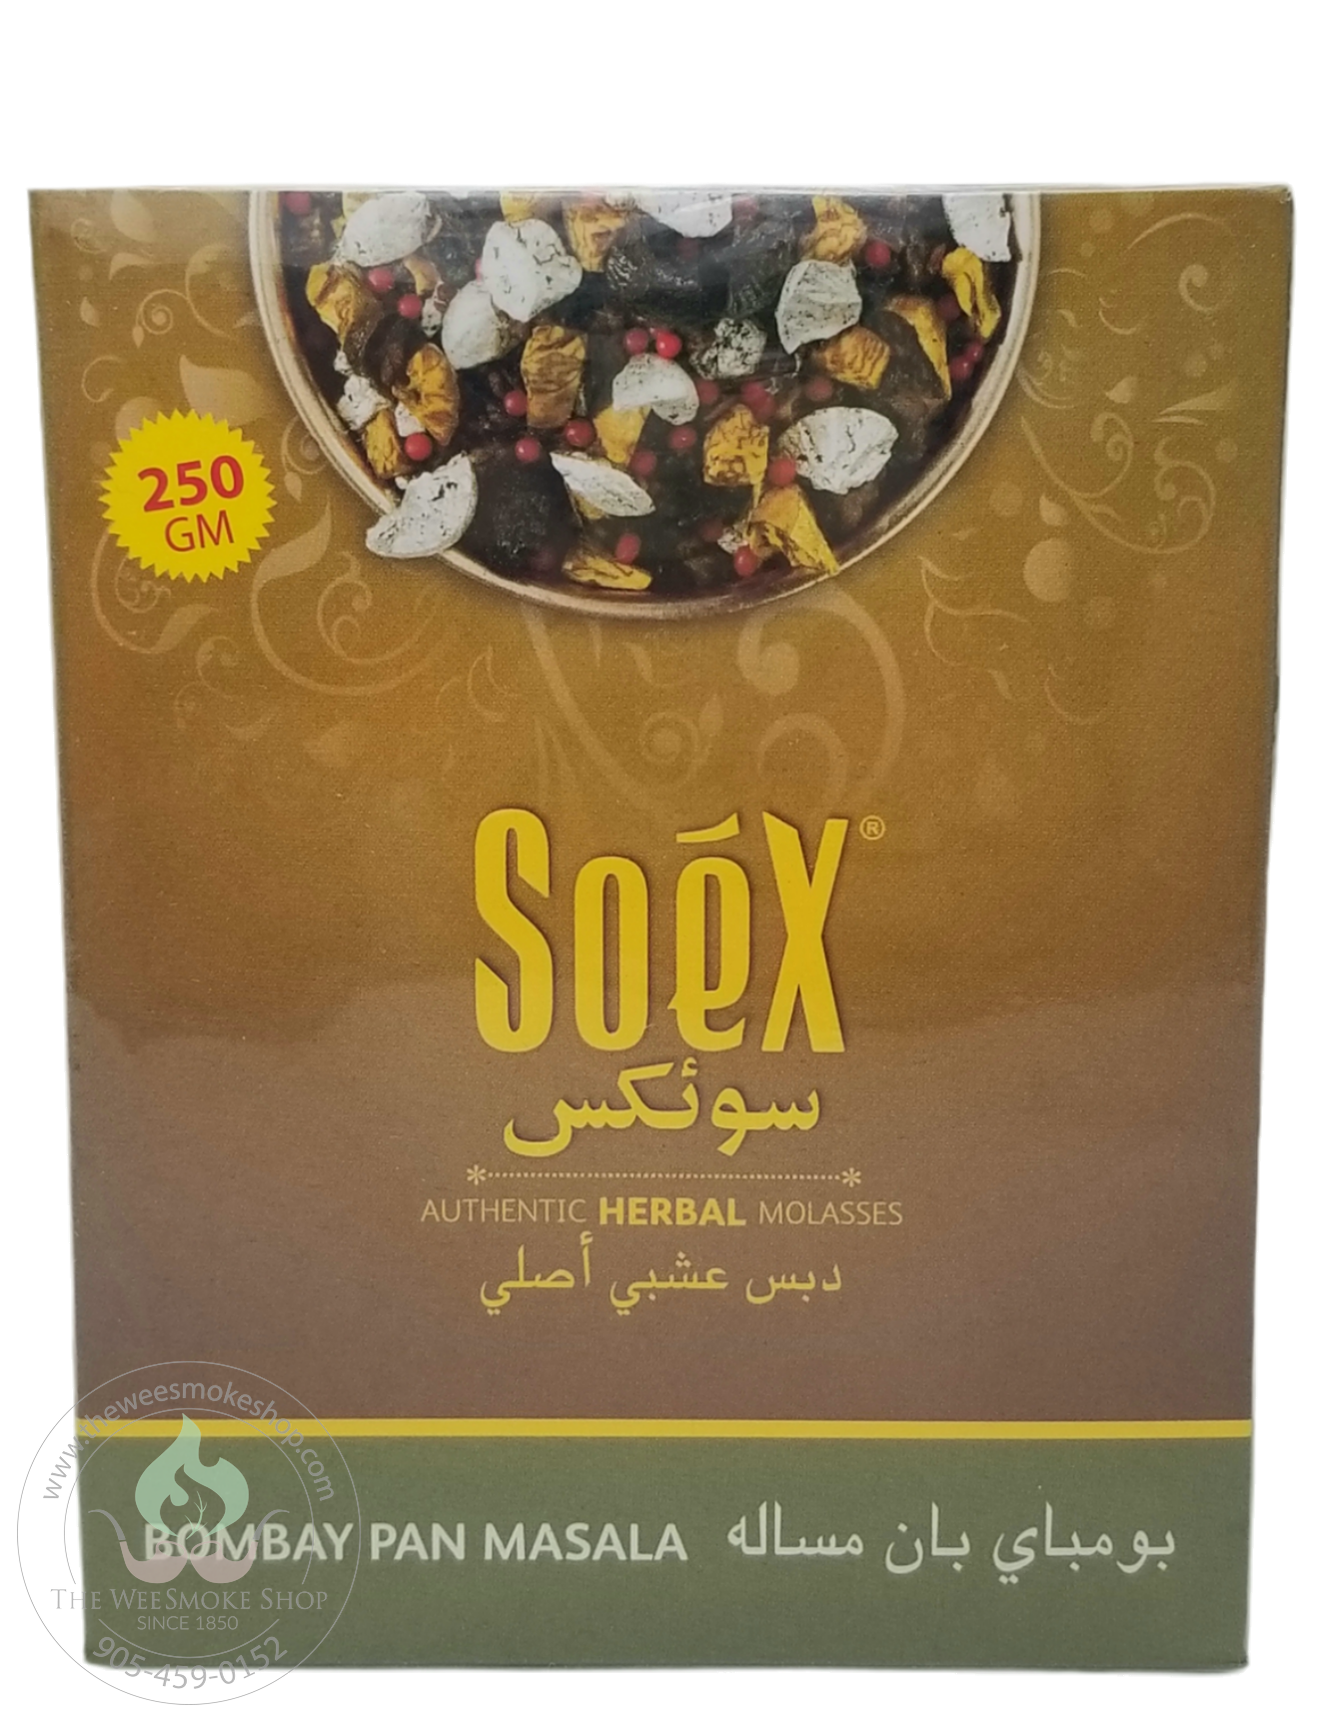 Bombay Pan Masala Soex Herbal Molasses (250g)-Hookah accessories-The Wee Smoke Shop